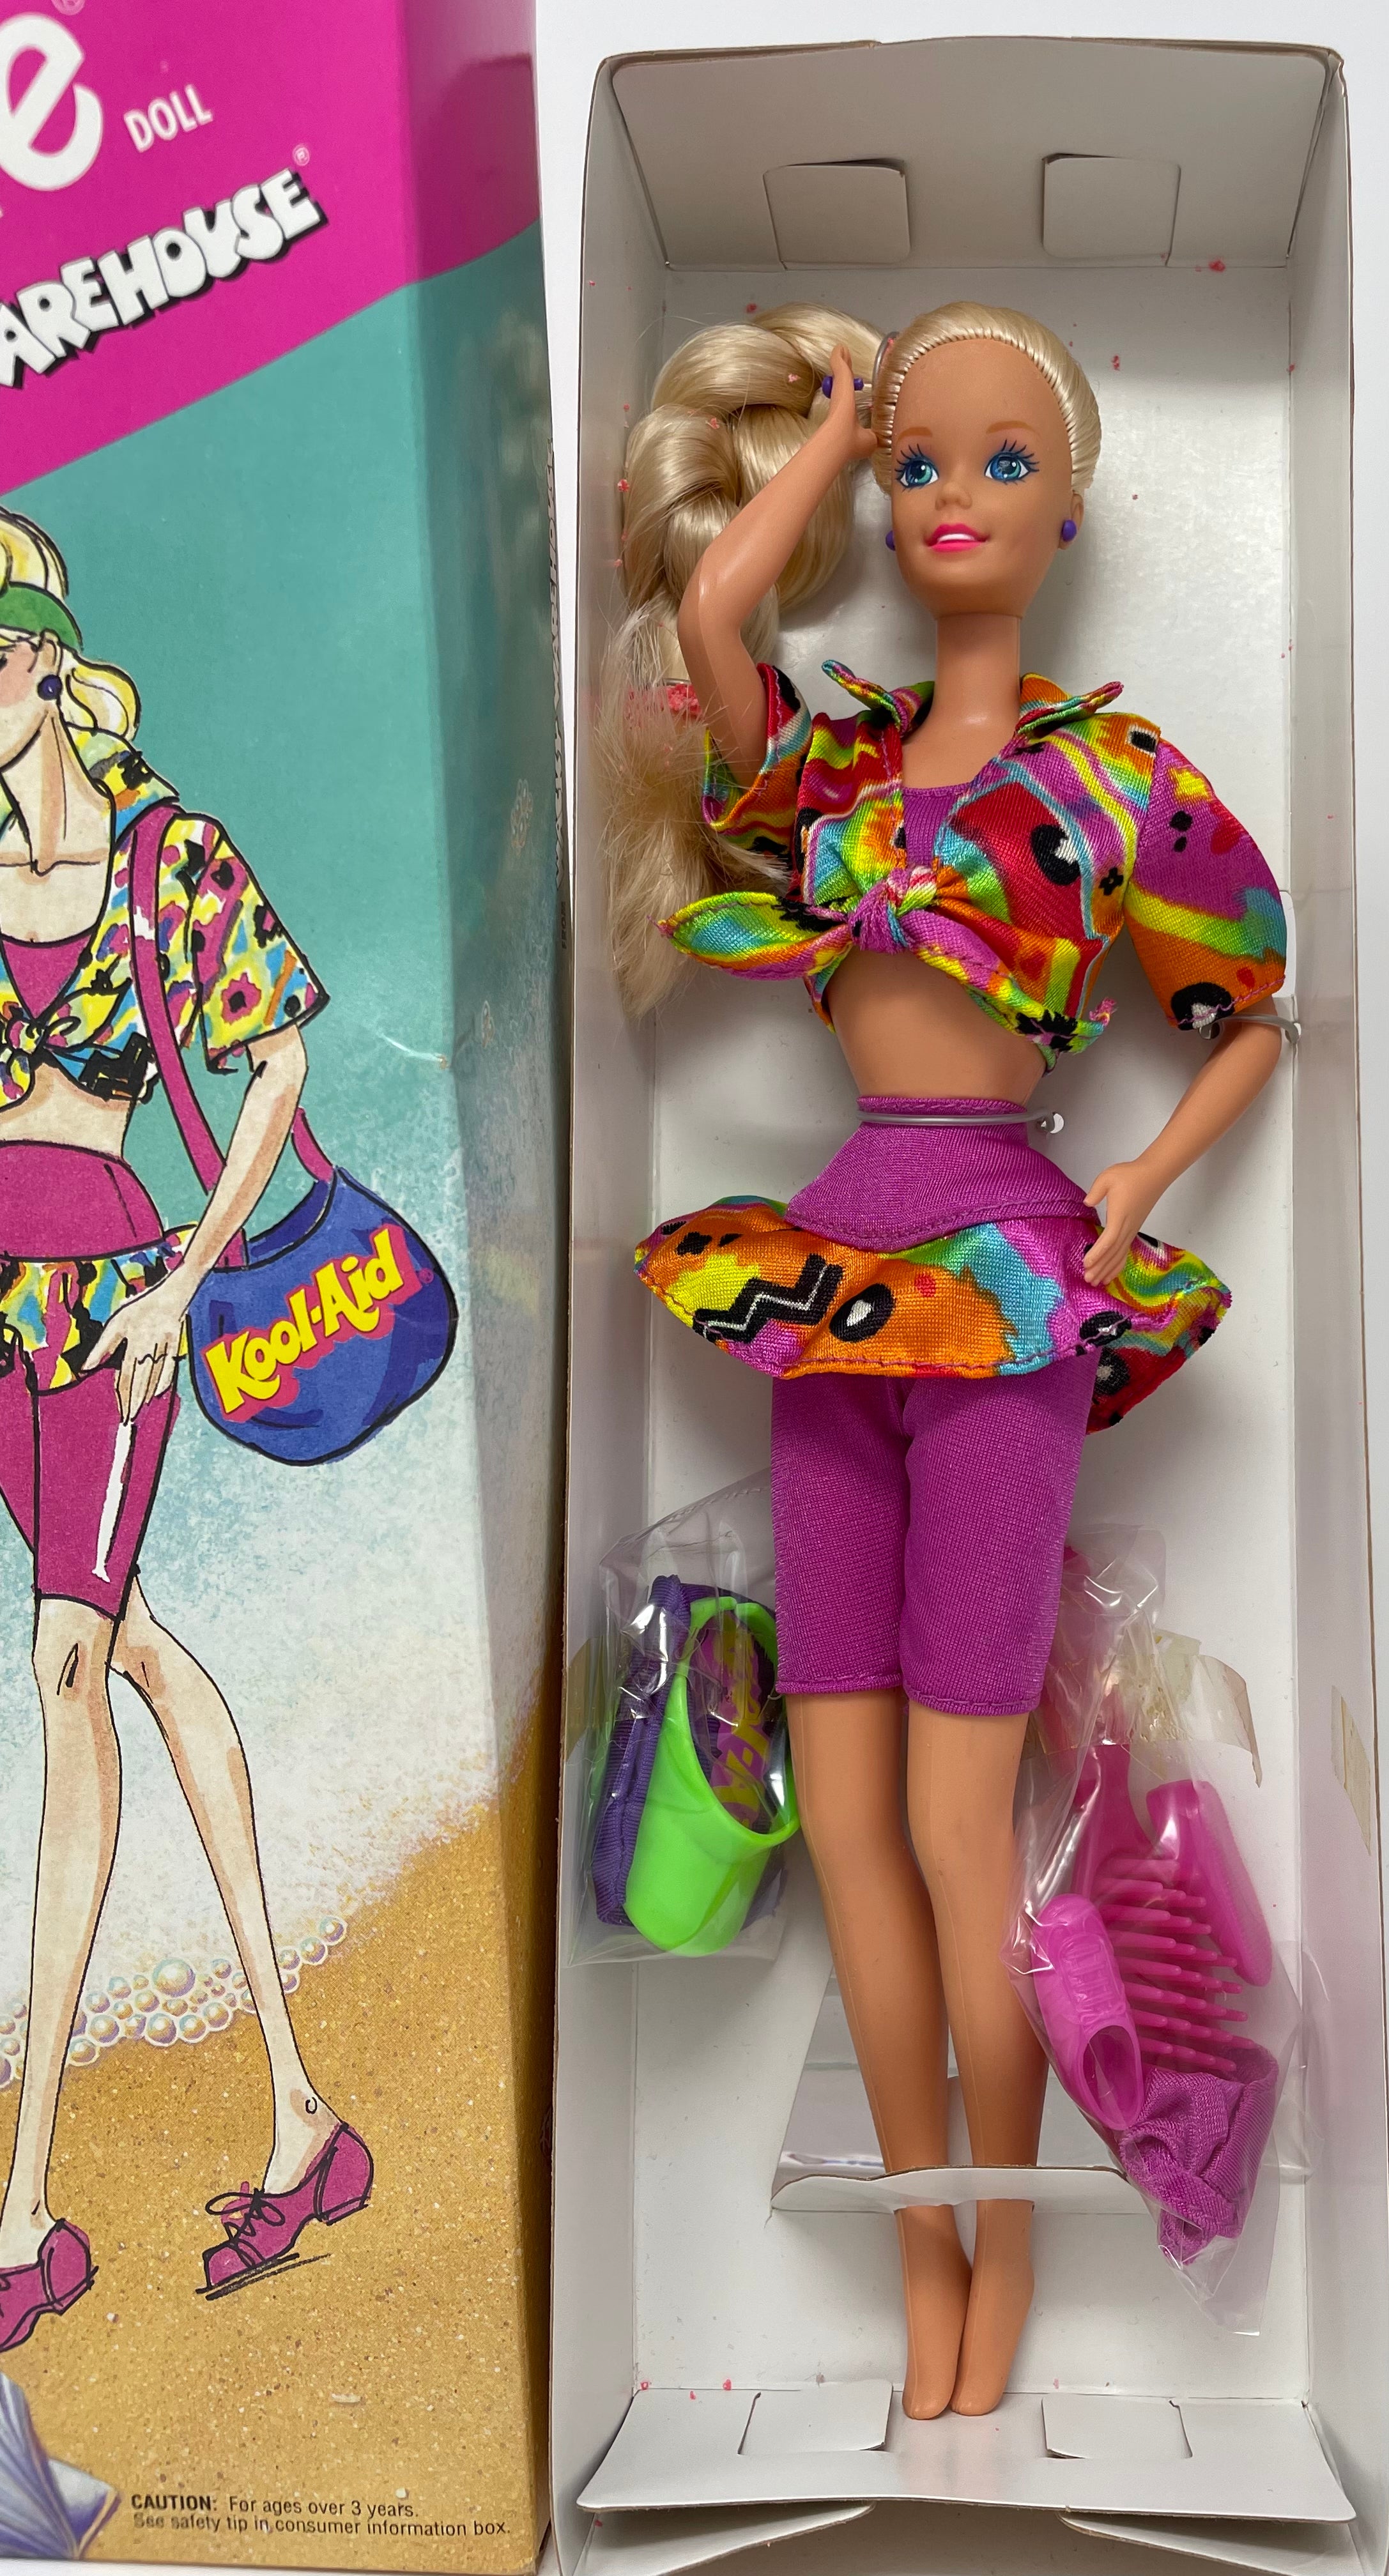 Collectors Edition 1992 KoolAid Wacky Warehouse Barbie #10309